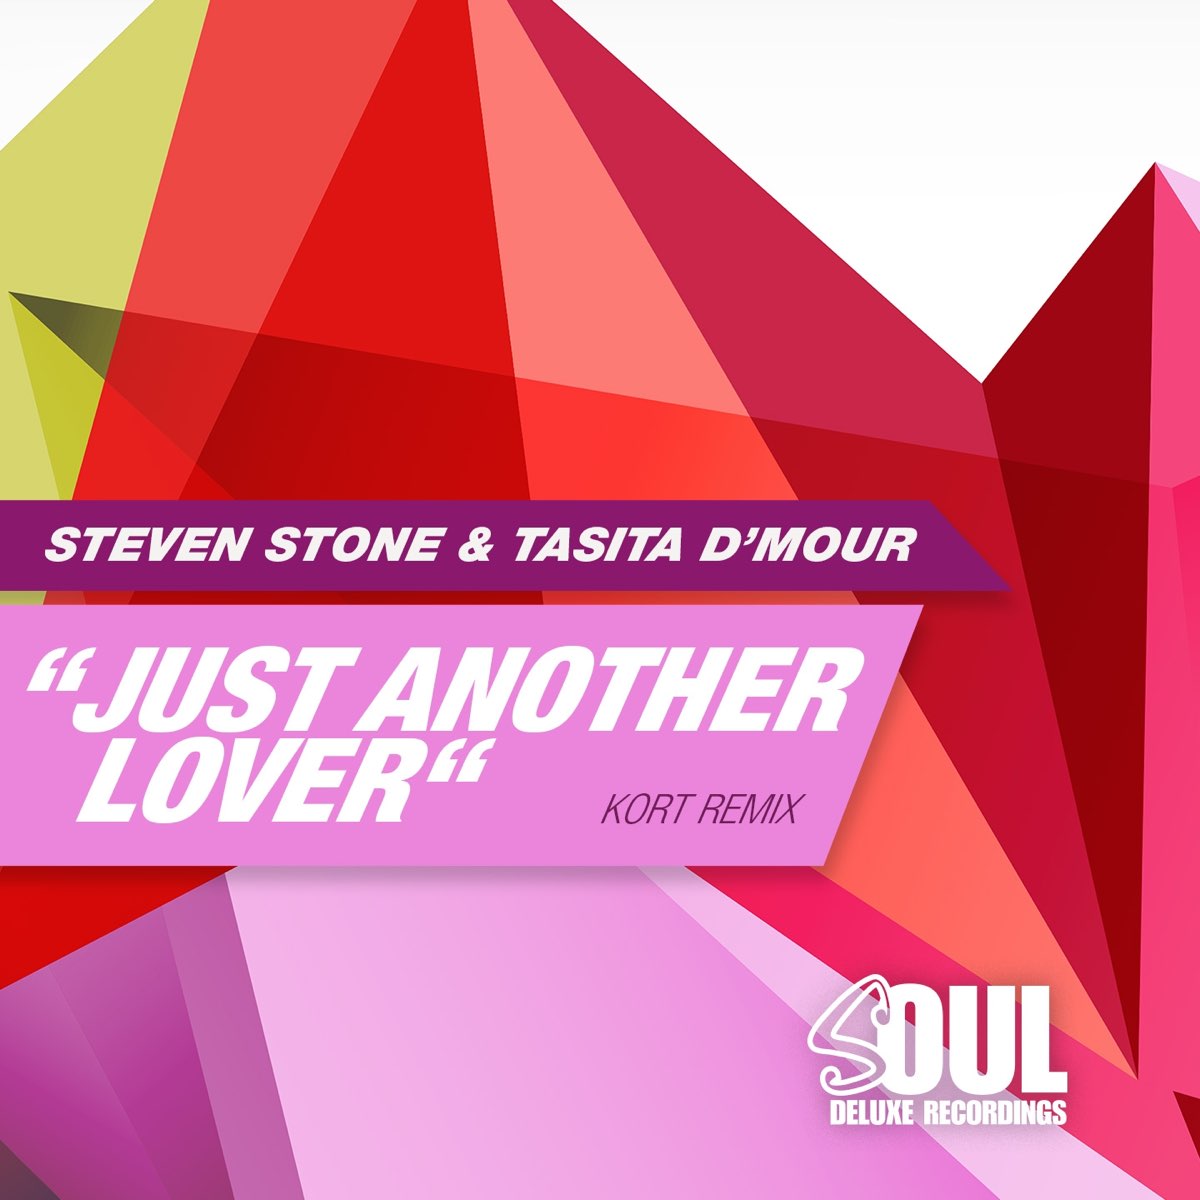 Just stone. Another Love Remix. "Kort Mahler" Art.